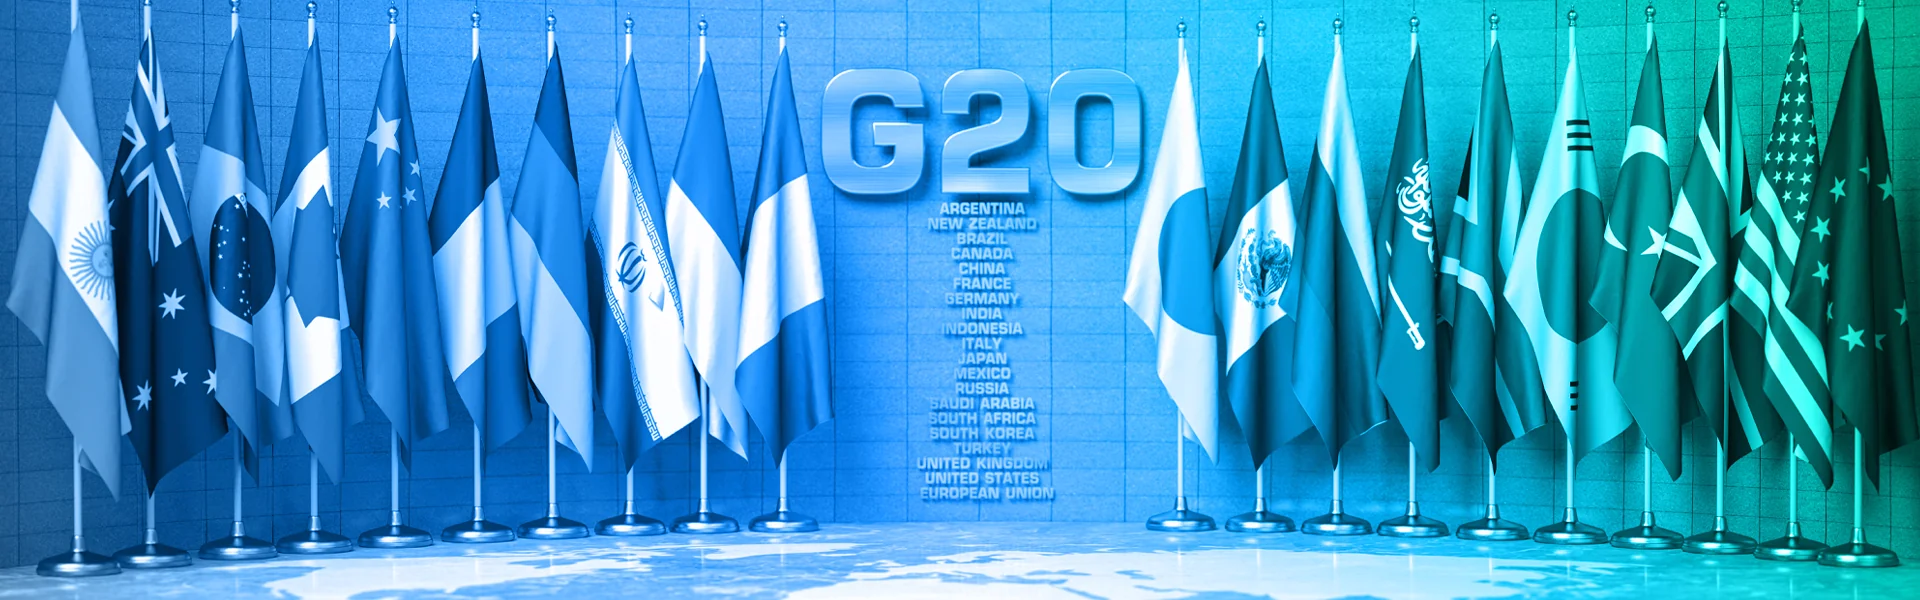 blog g20 meeting fiscal 12 7 21